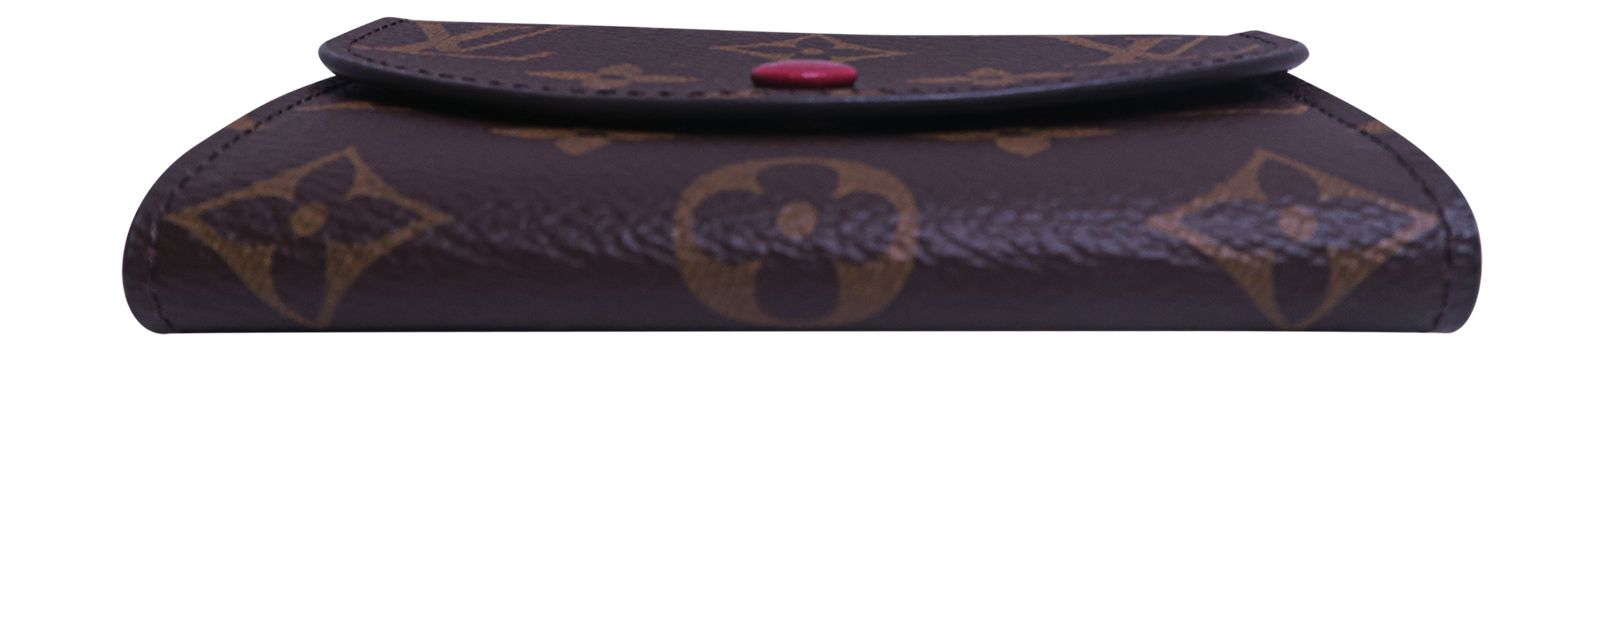 13 Most Popular Louis Vuitton Handbags & Purses - Paisley & Sparrow